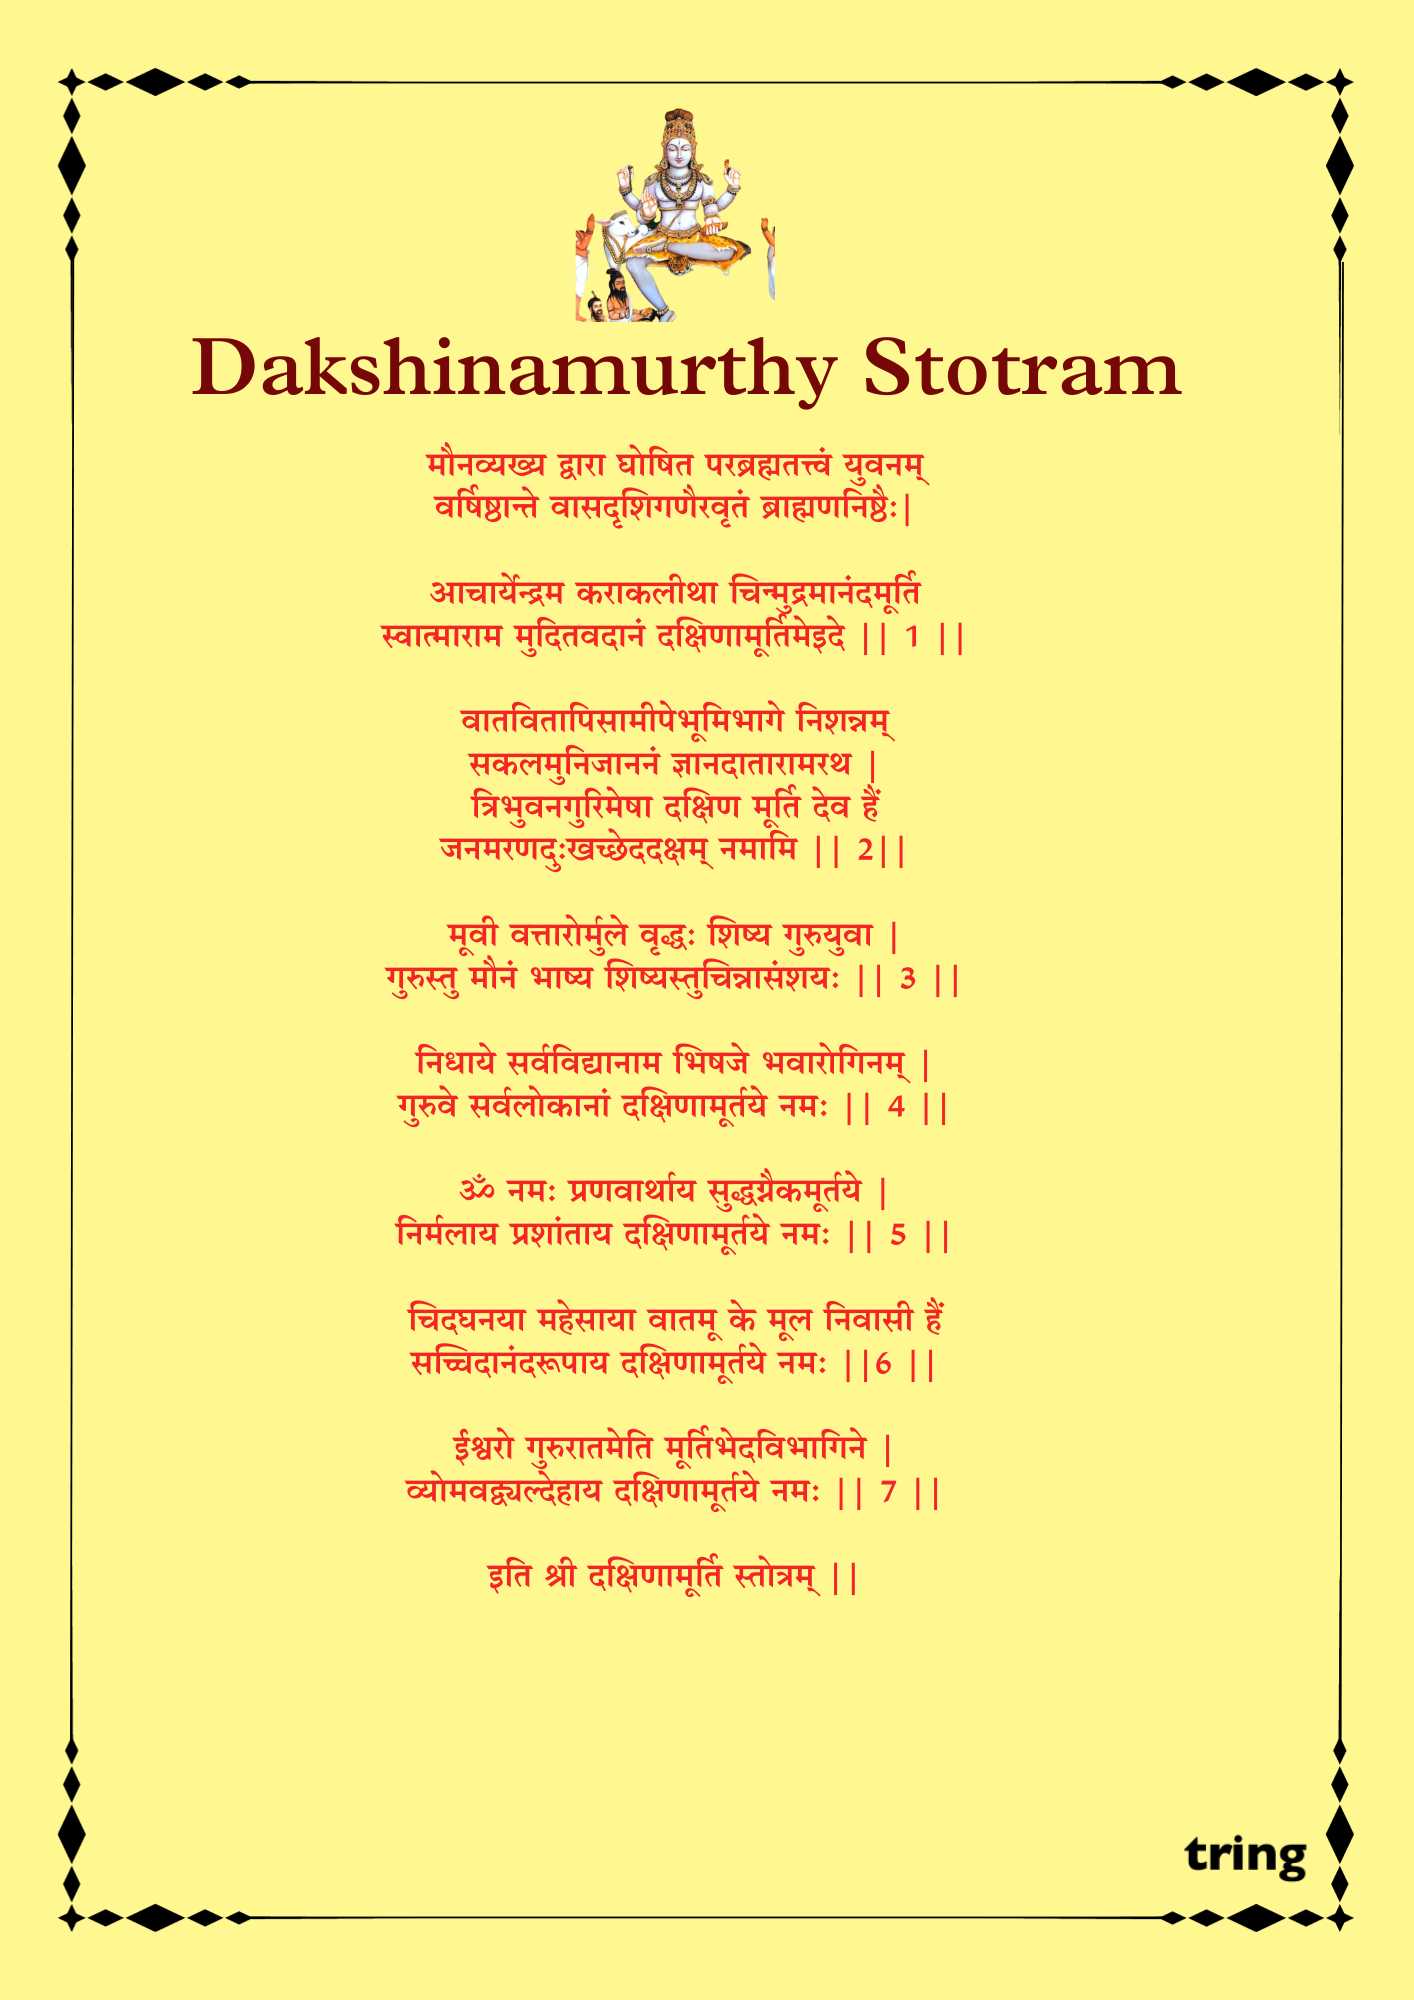 Dakshinamurthy Stotram Images